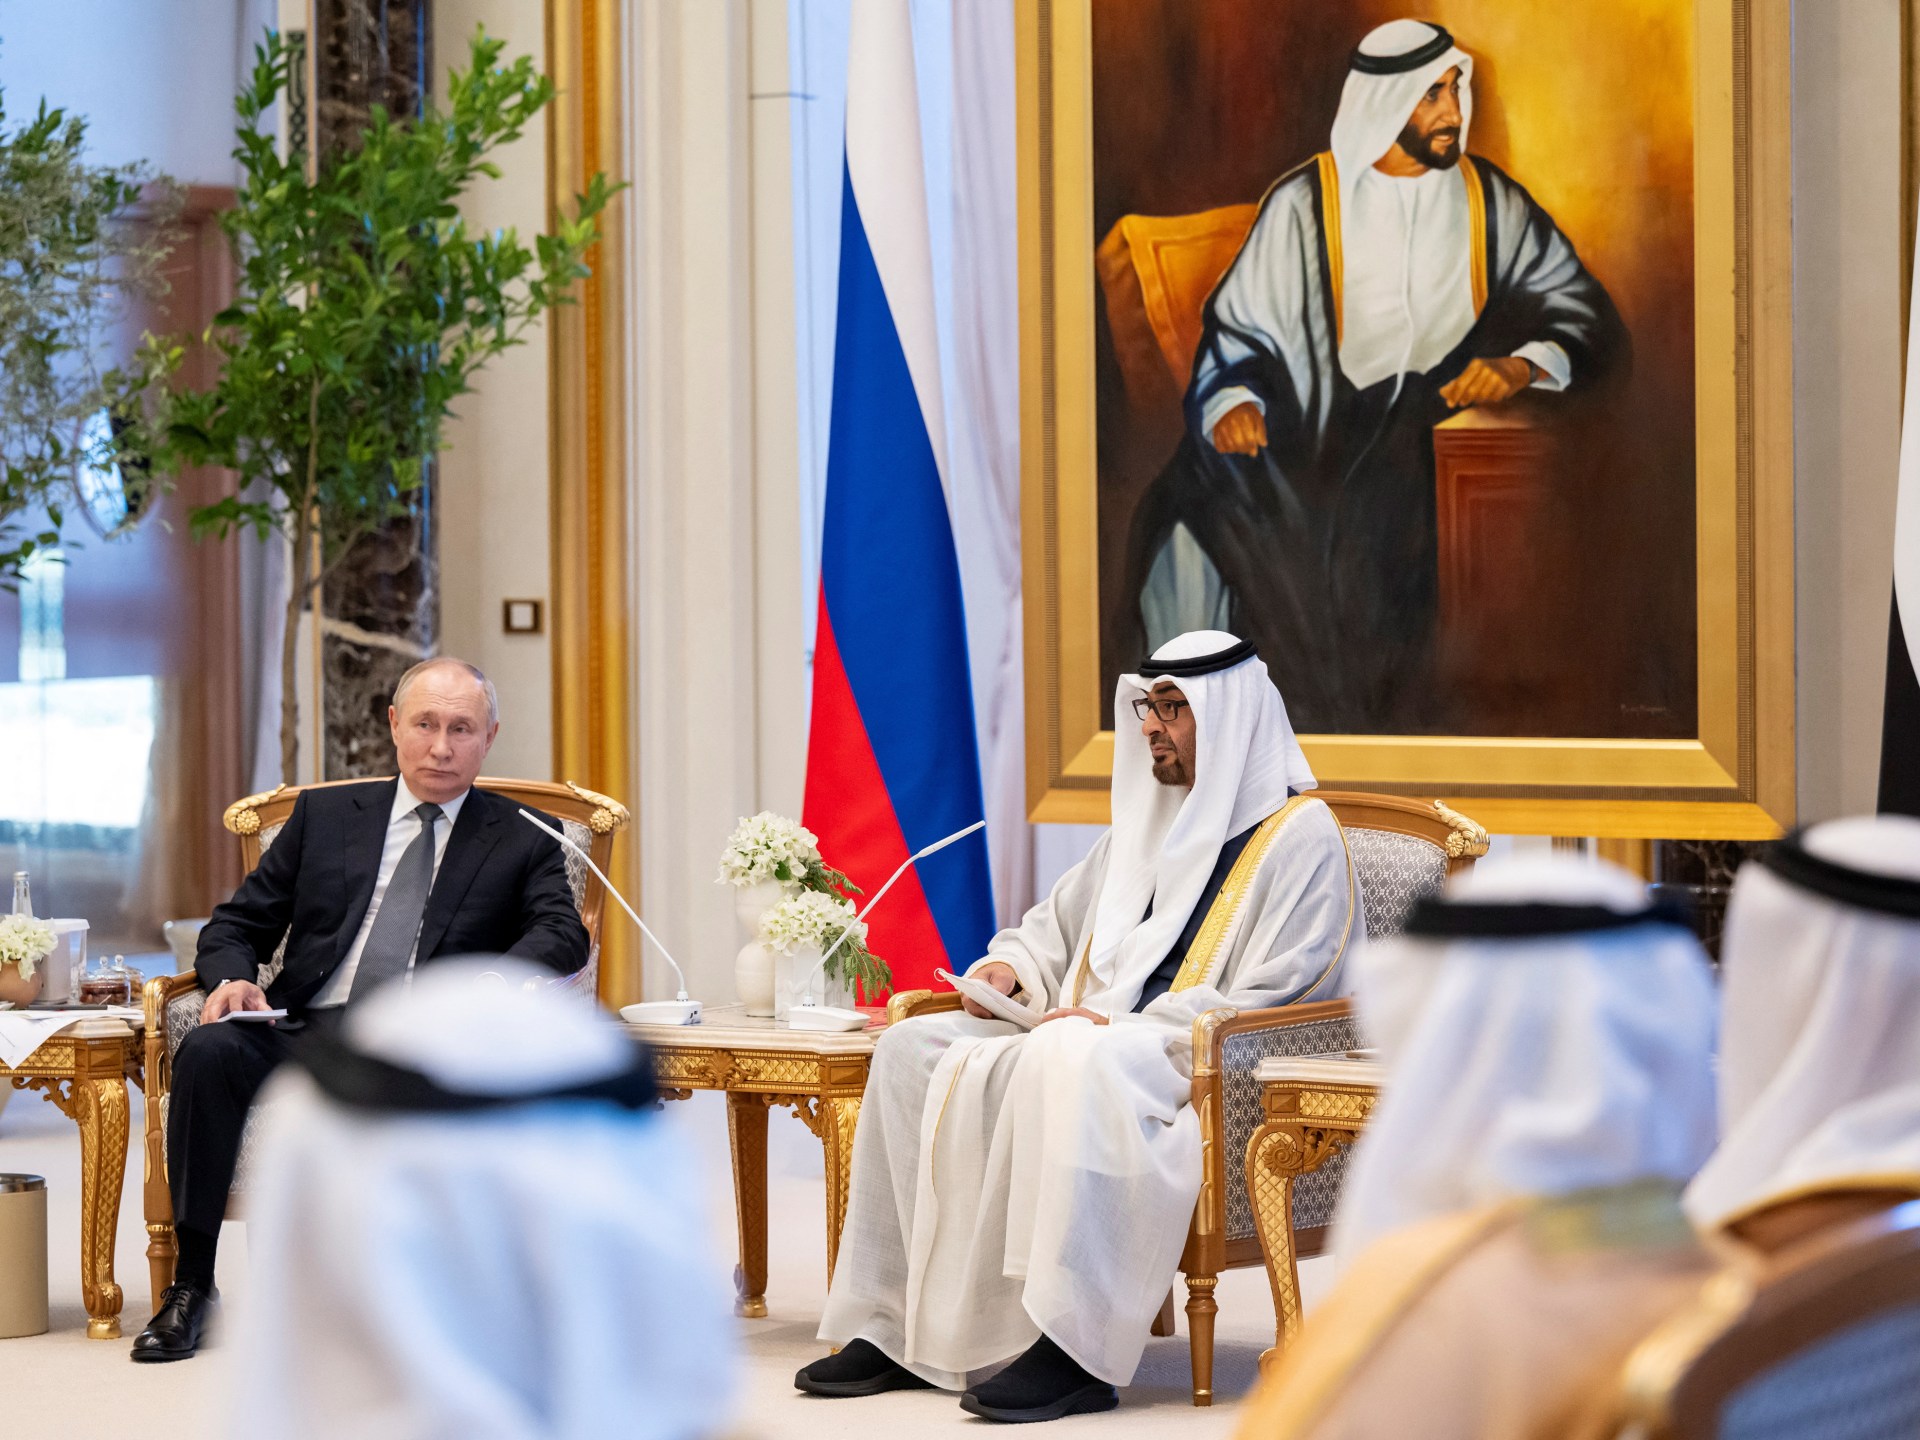 Putin makes rare trip to Middle East to meet with UAE and Saudi leaders | Vladimir Putin News #Putin #rare #trip #Middle #East #meet #UAE #Saudi #leaders #Vladimir #Putin #News